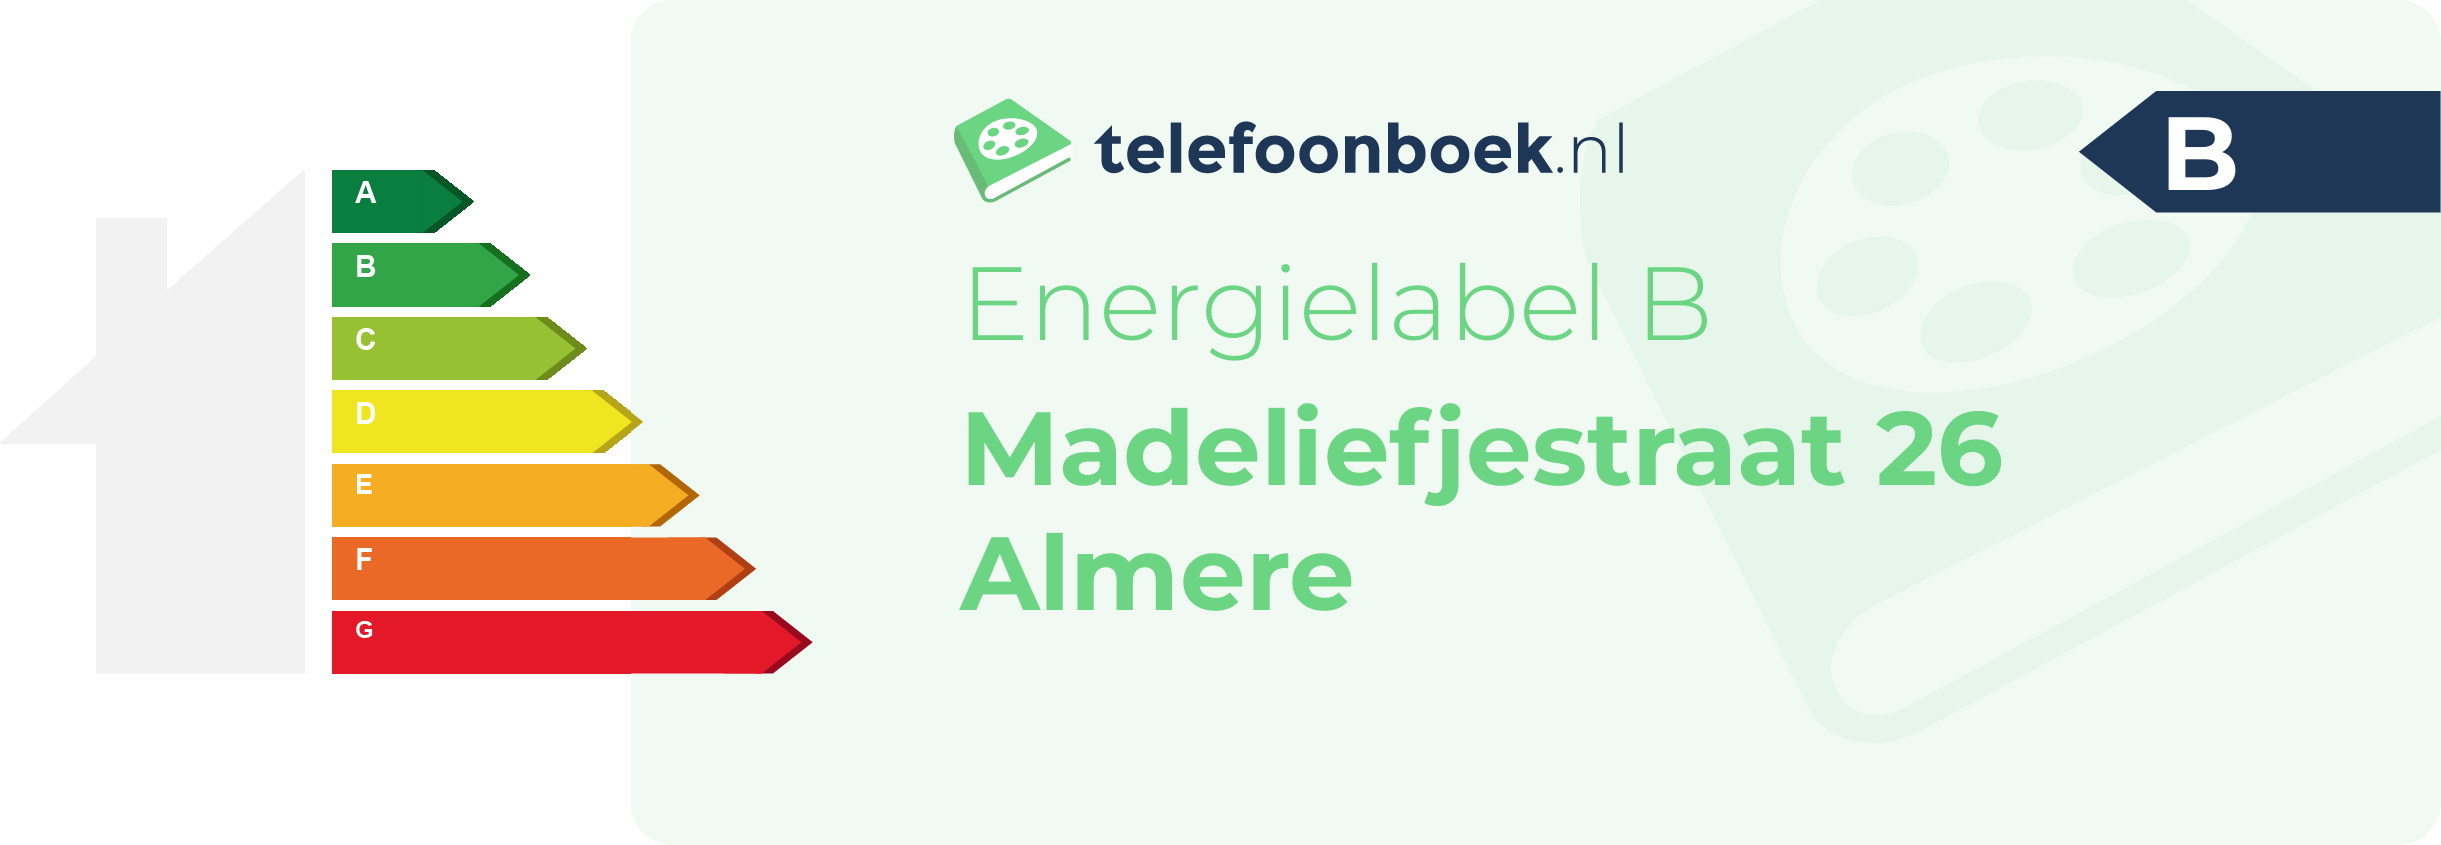 Energielabel Madeliefjestraat 26 Almere